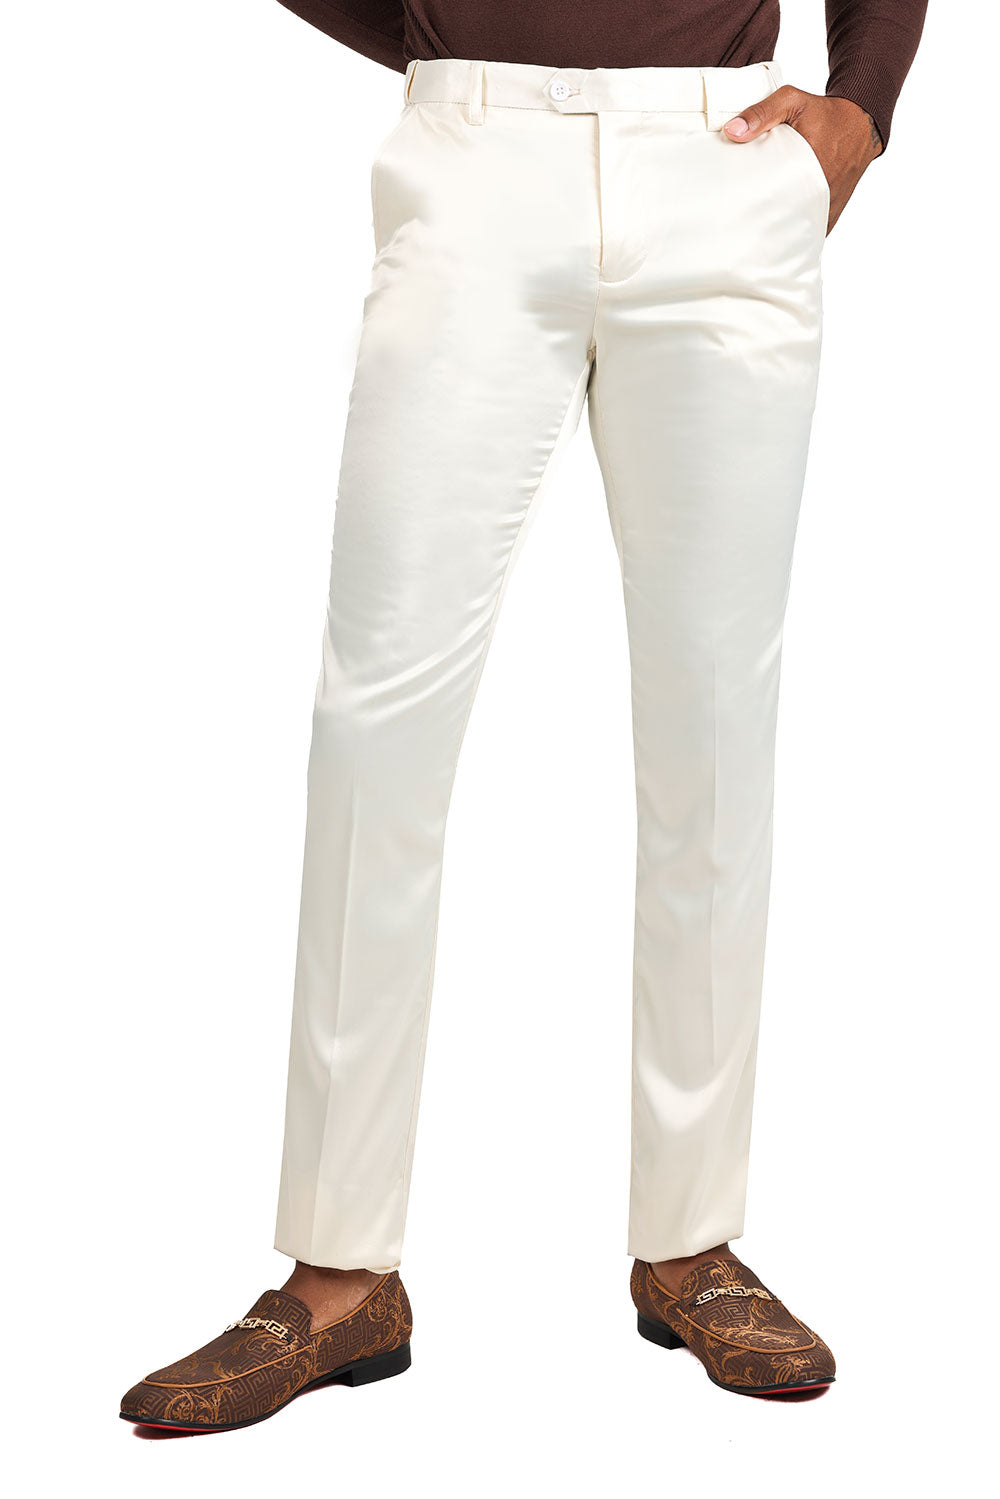 BARABAS Men's Solid Color Plain Shiny Chino Dress Pants 3CP02 Cream